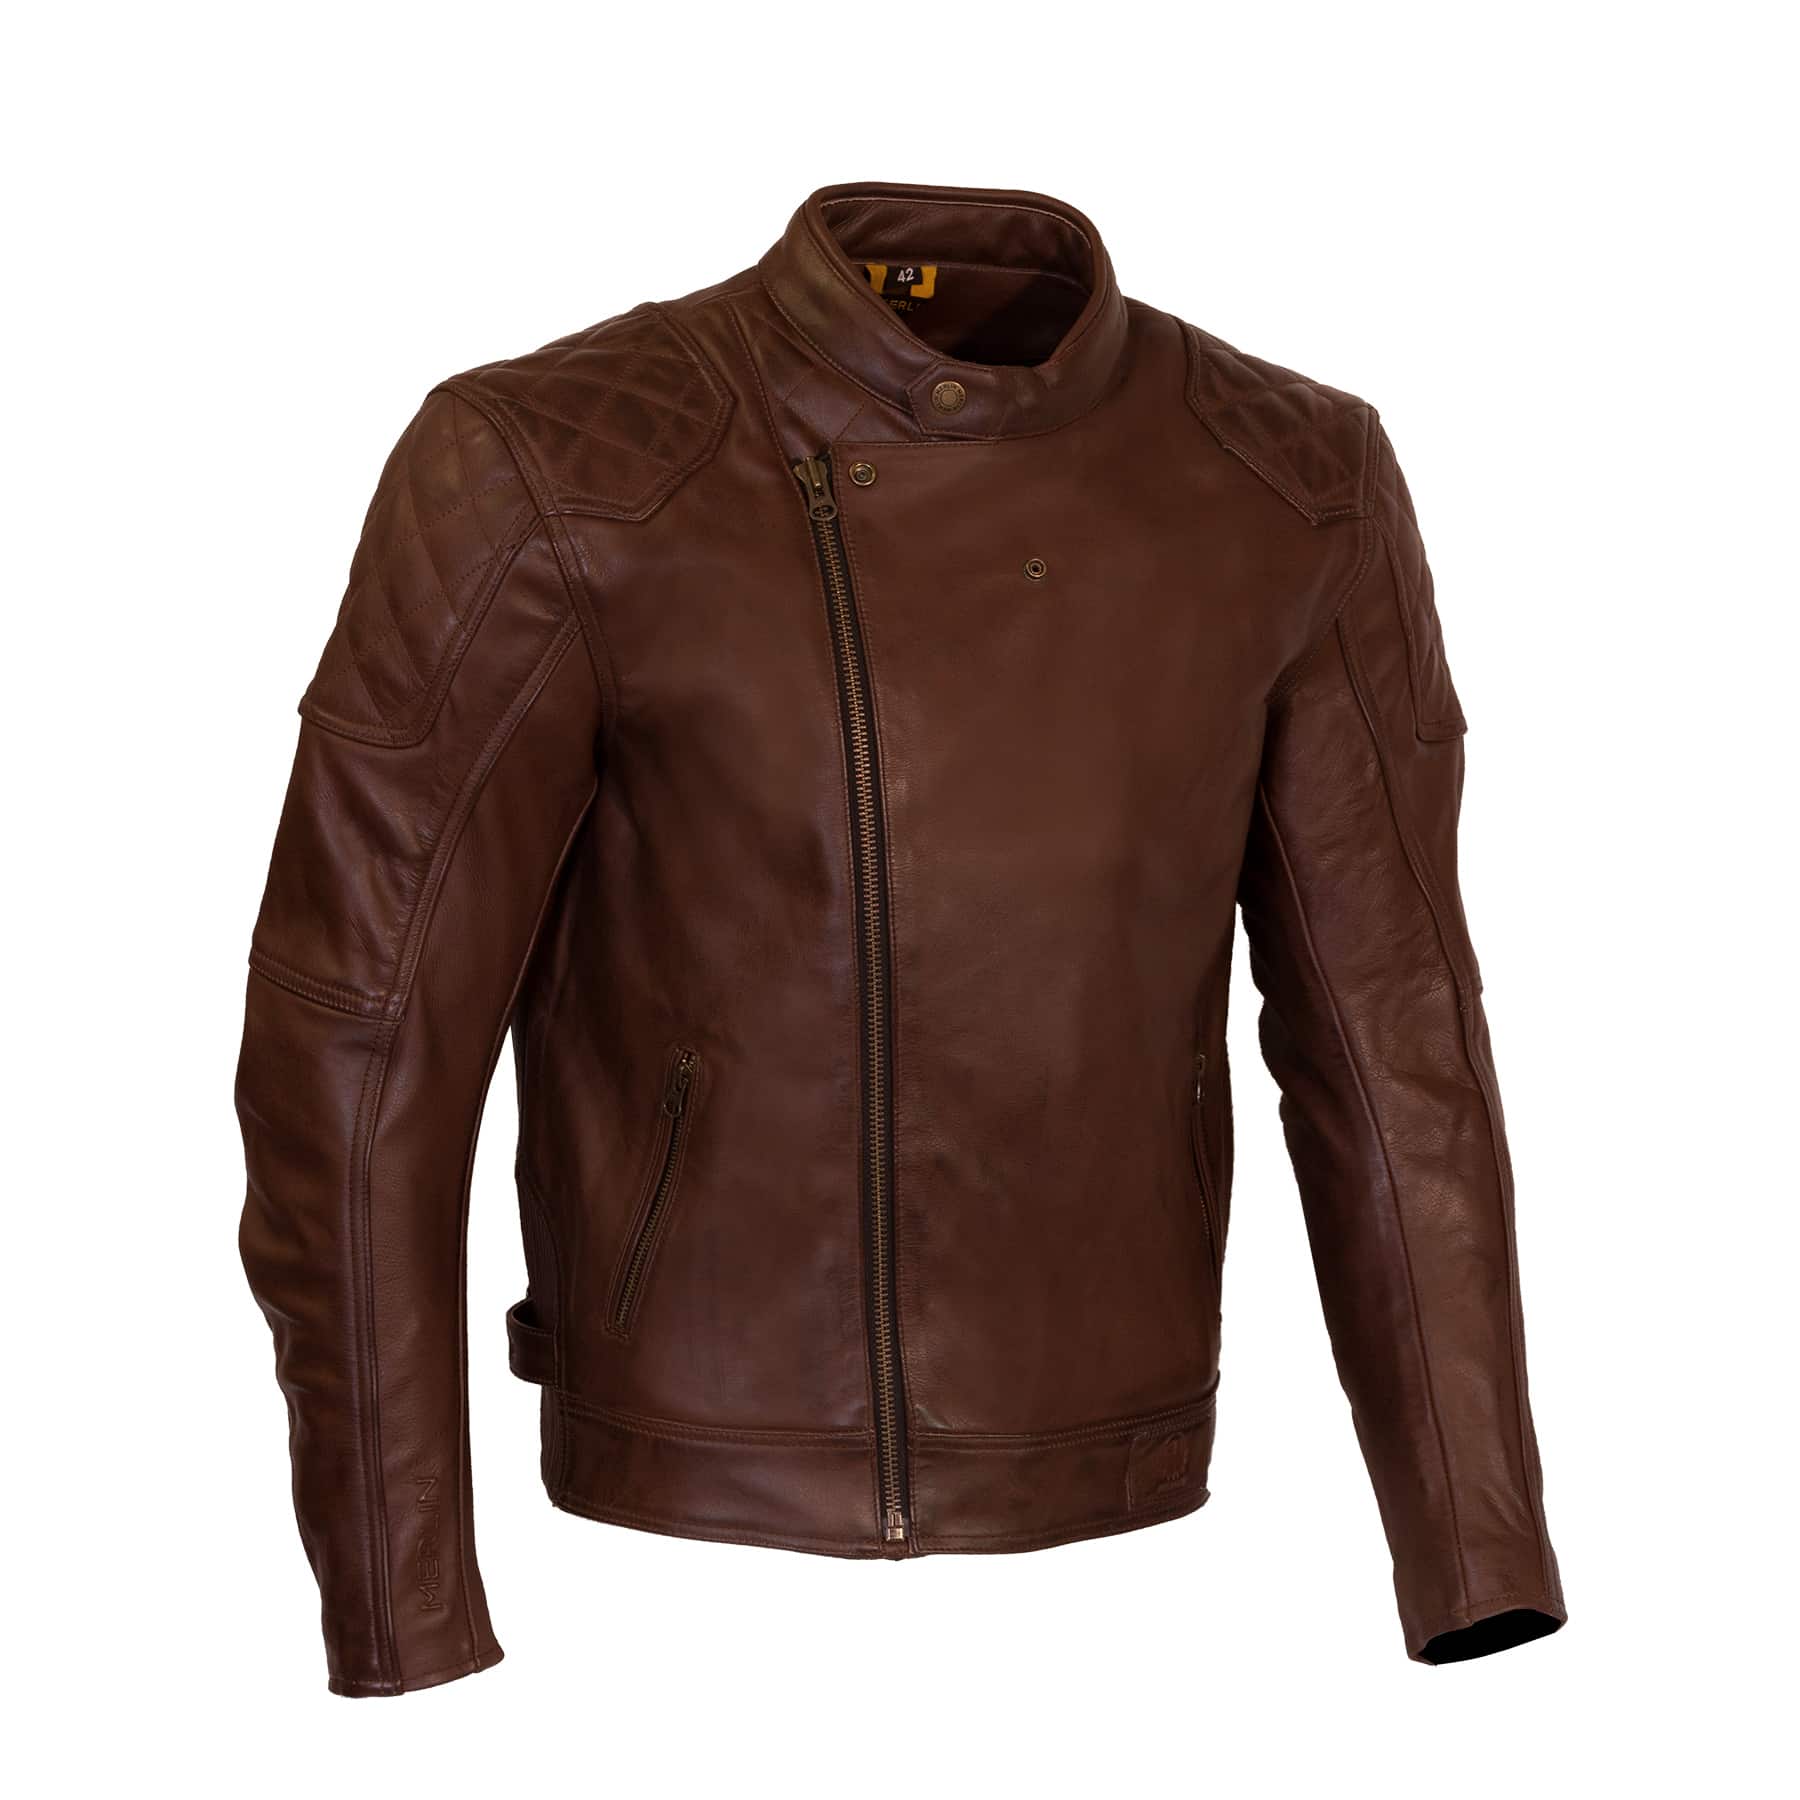 Merlin Chester jacket in brown